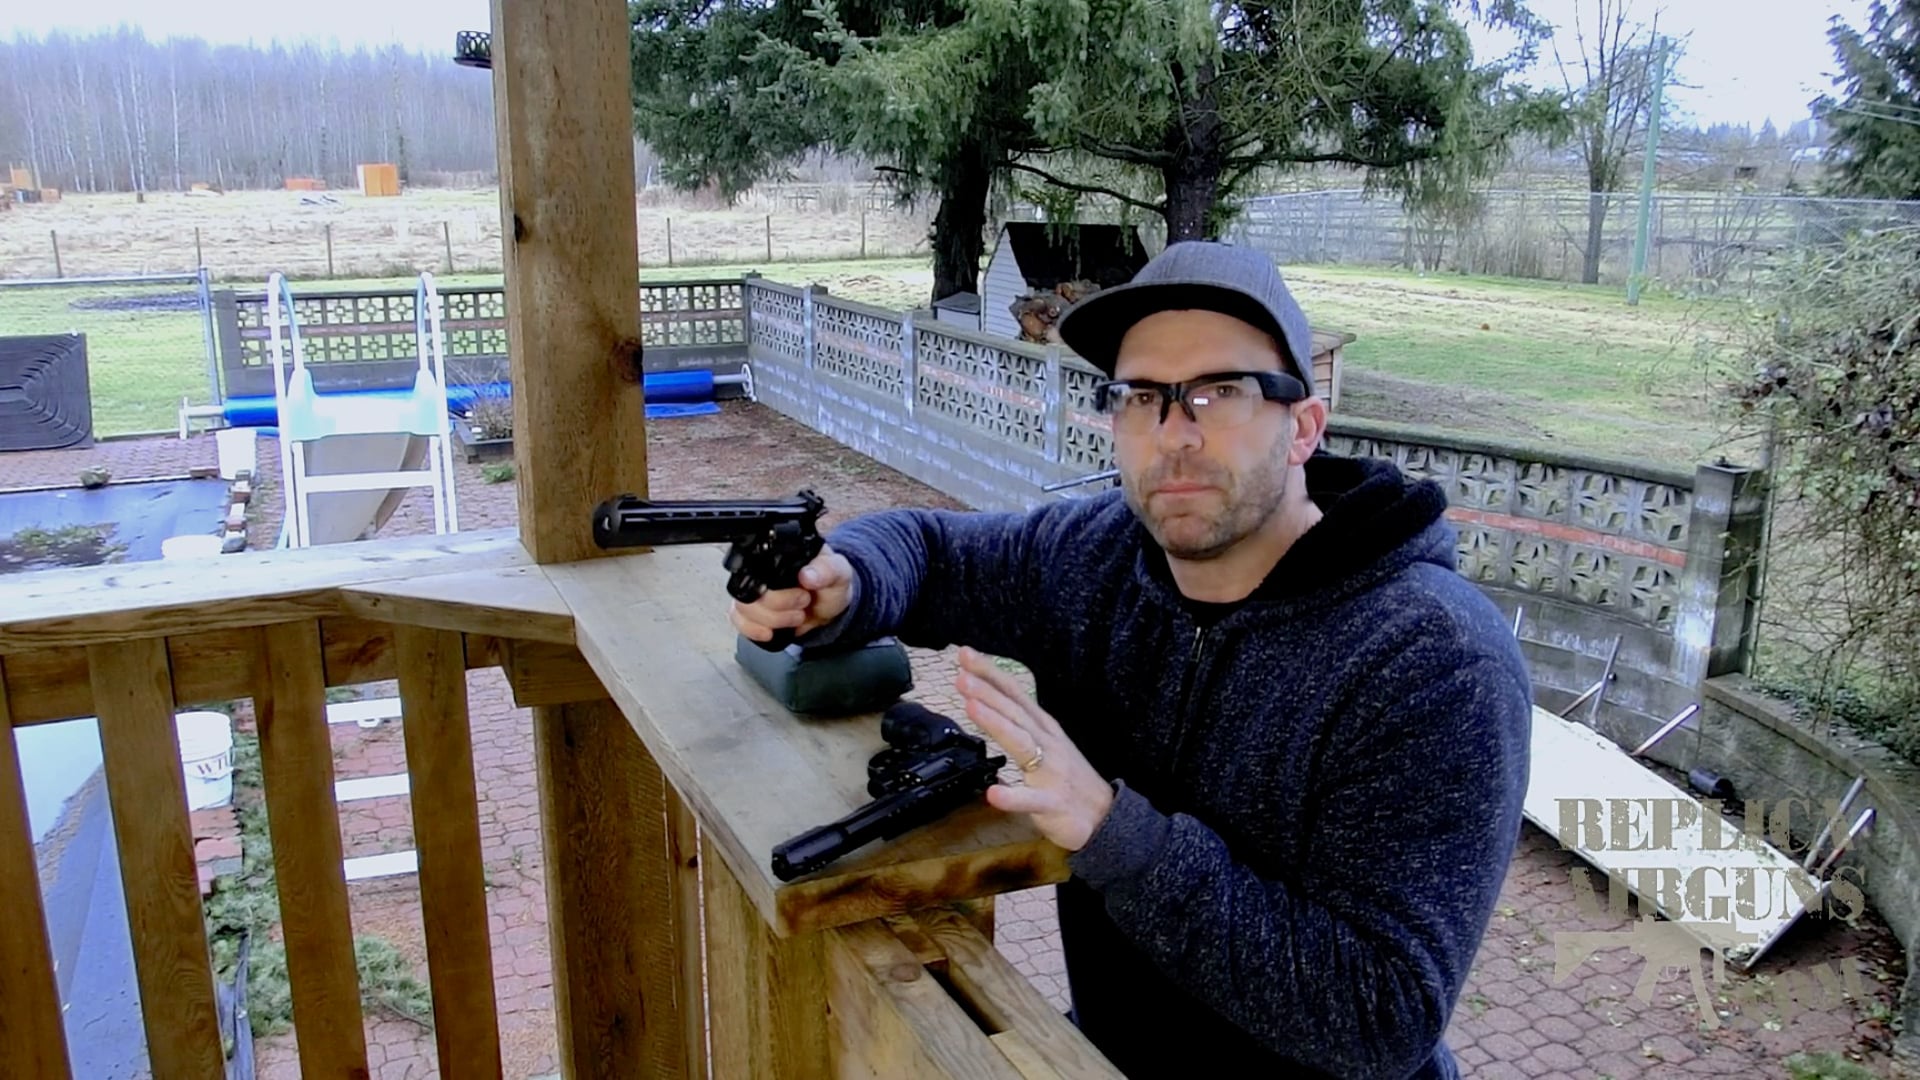 ASG Dan Wesson 8 inch Revolver vs Umarex S&W 327 TRR8 Head to Head Shootout